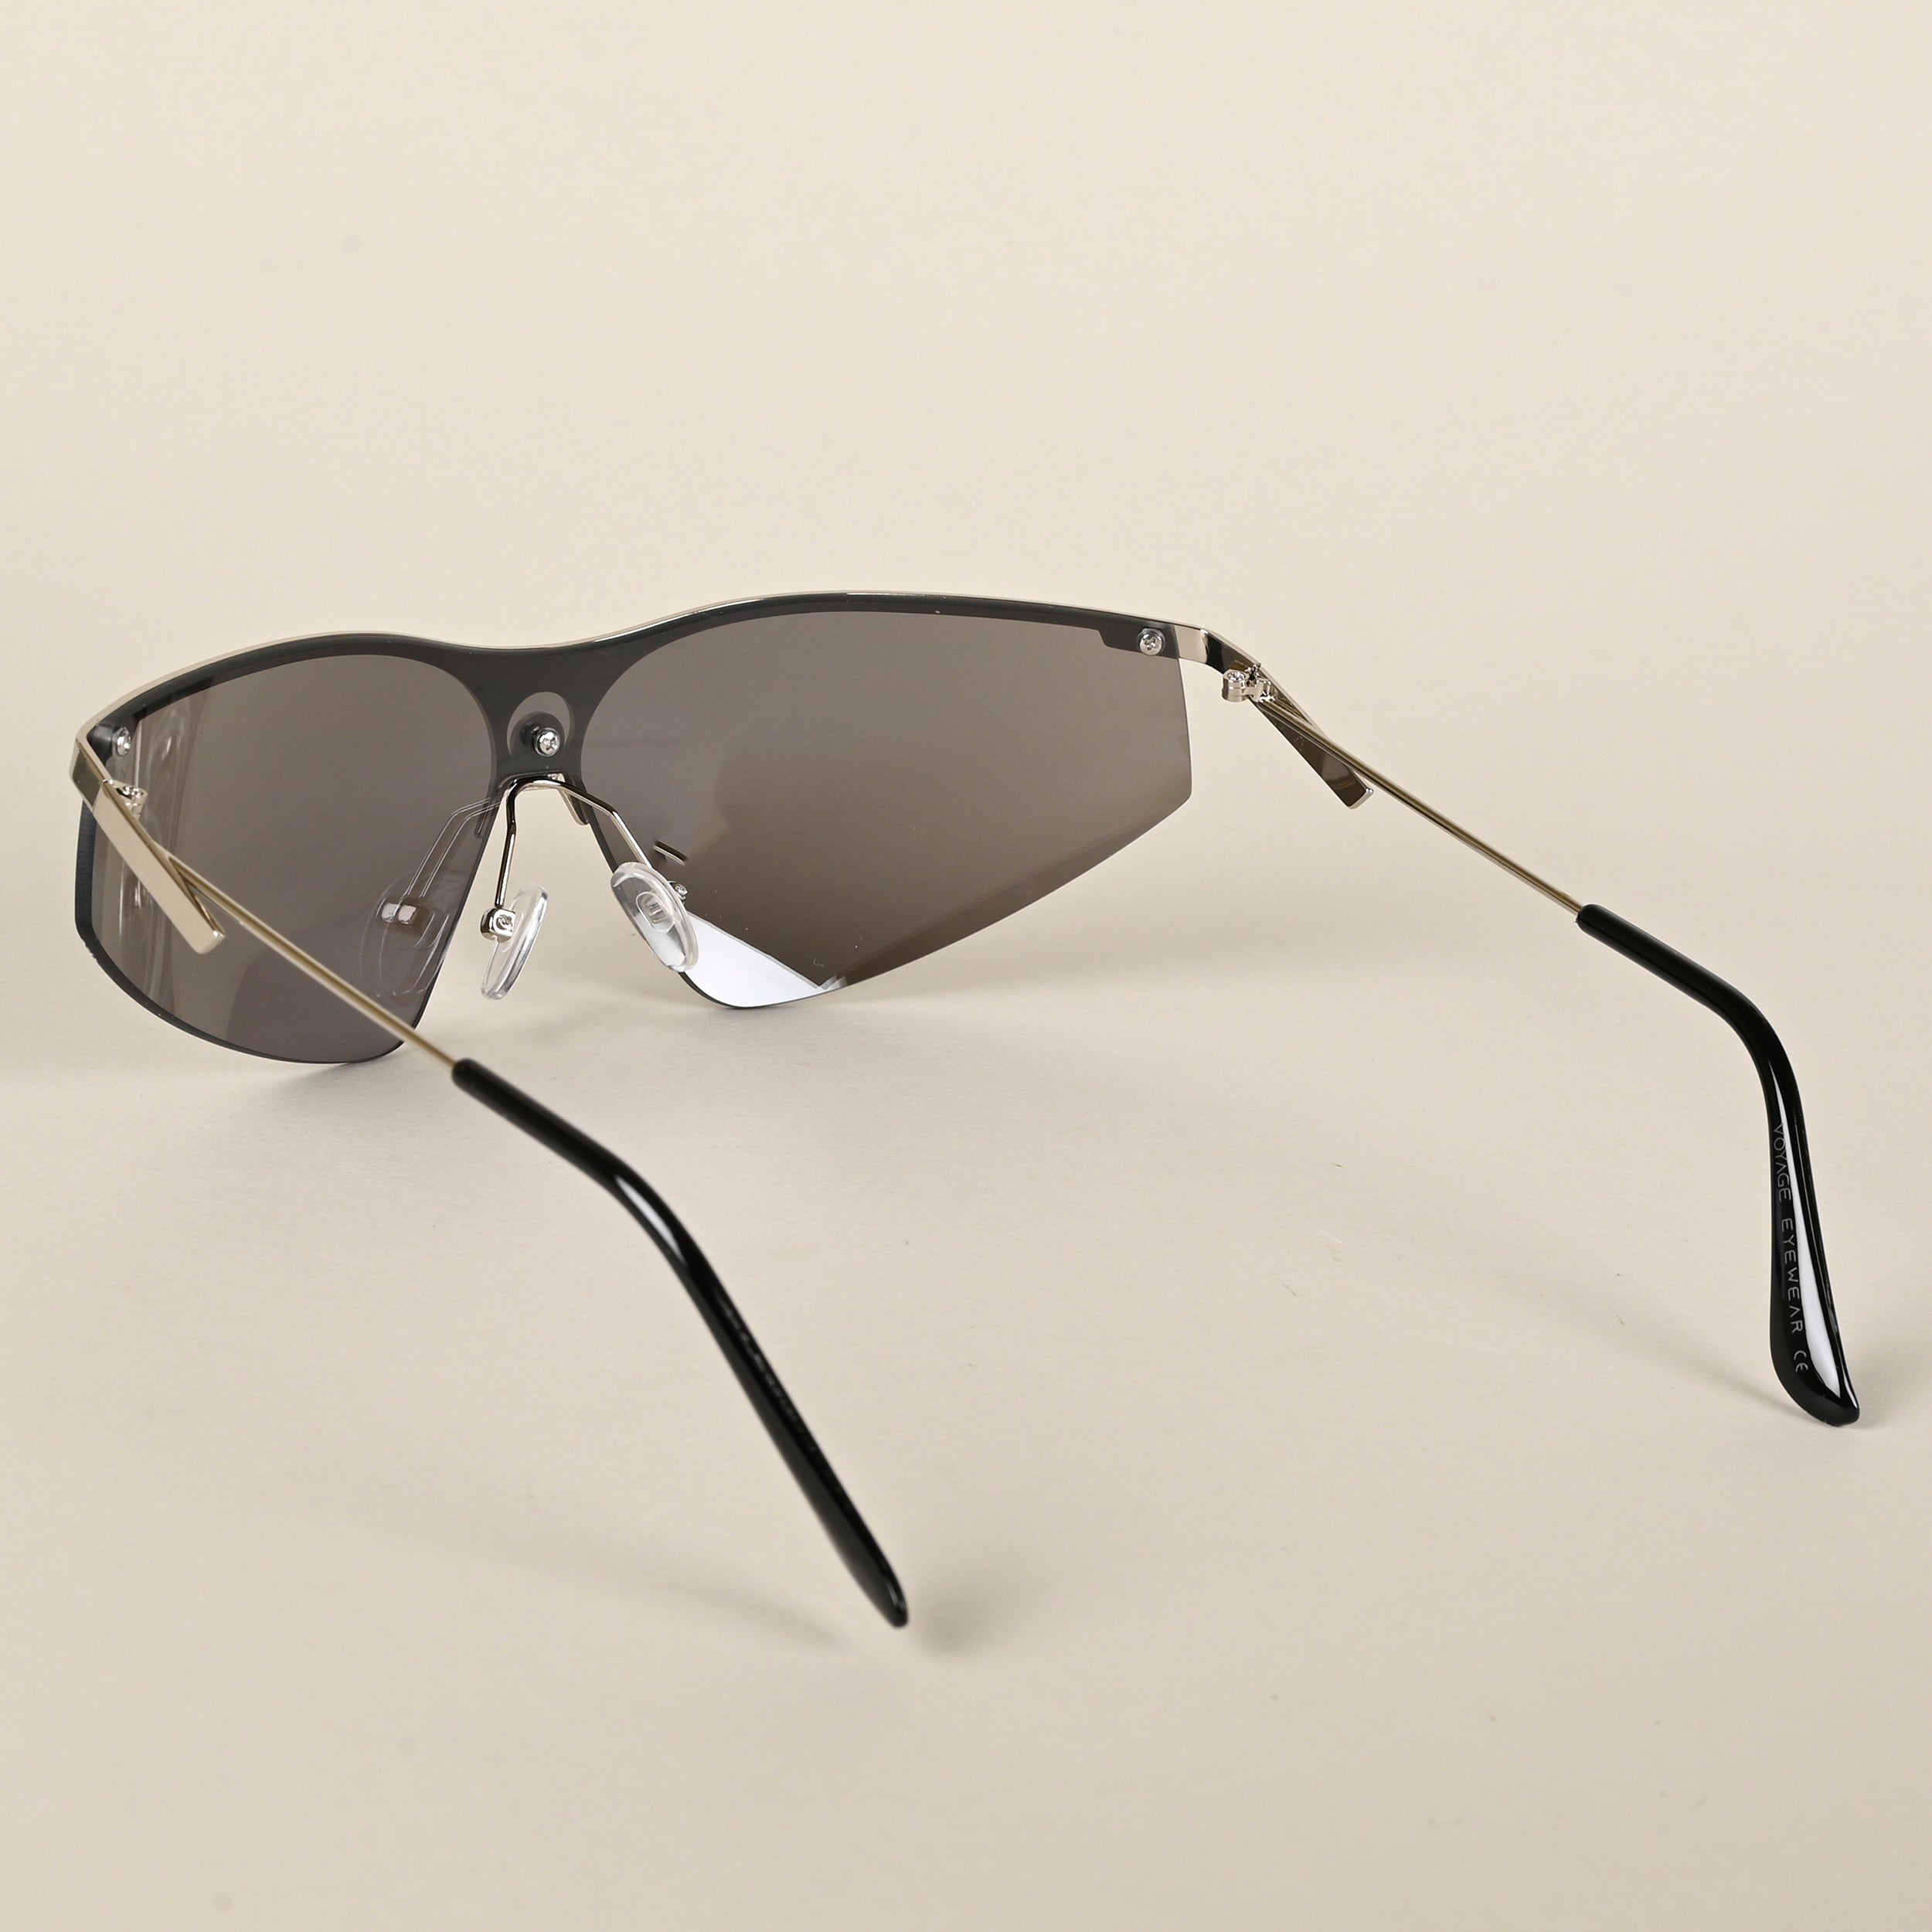 Voyage Grey Wrap-Around Sunglasses for Men & Women (3563MG4220)